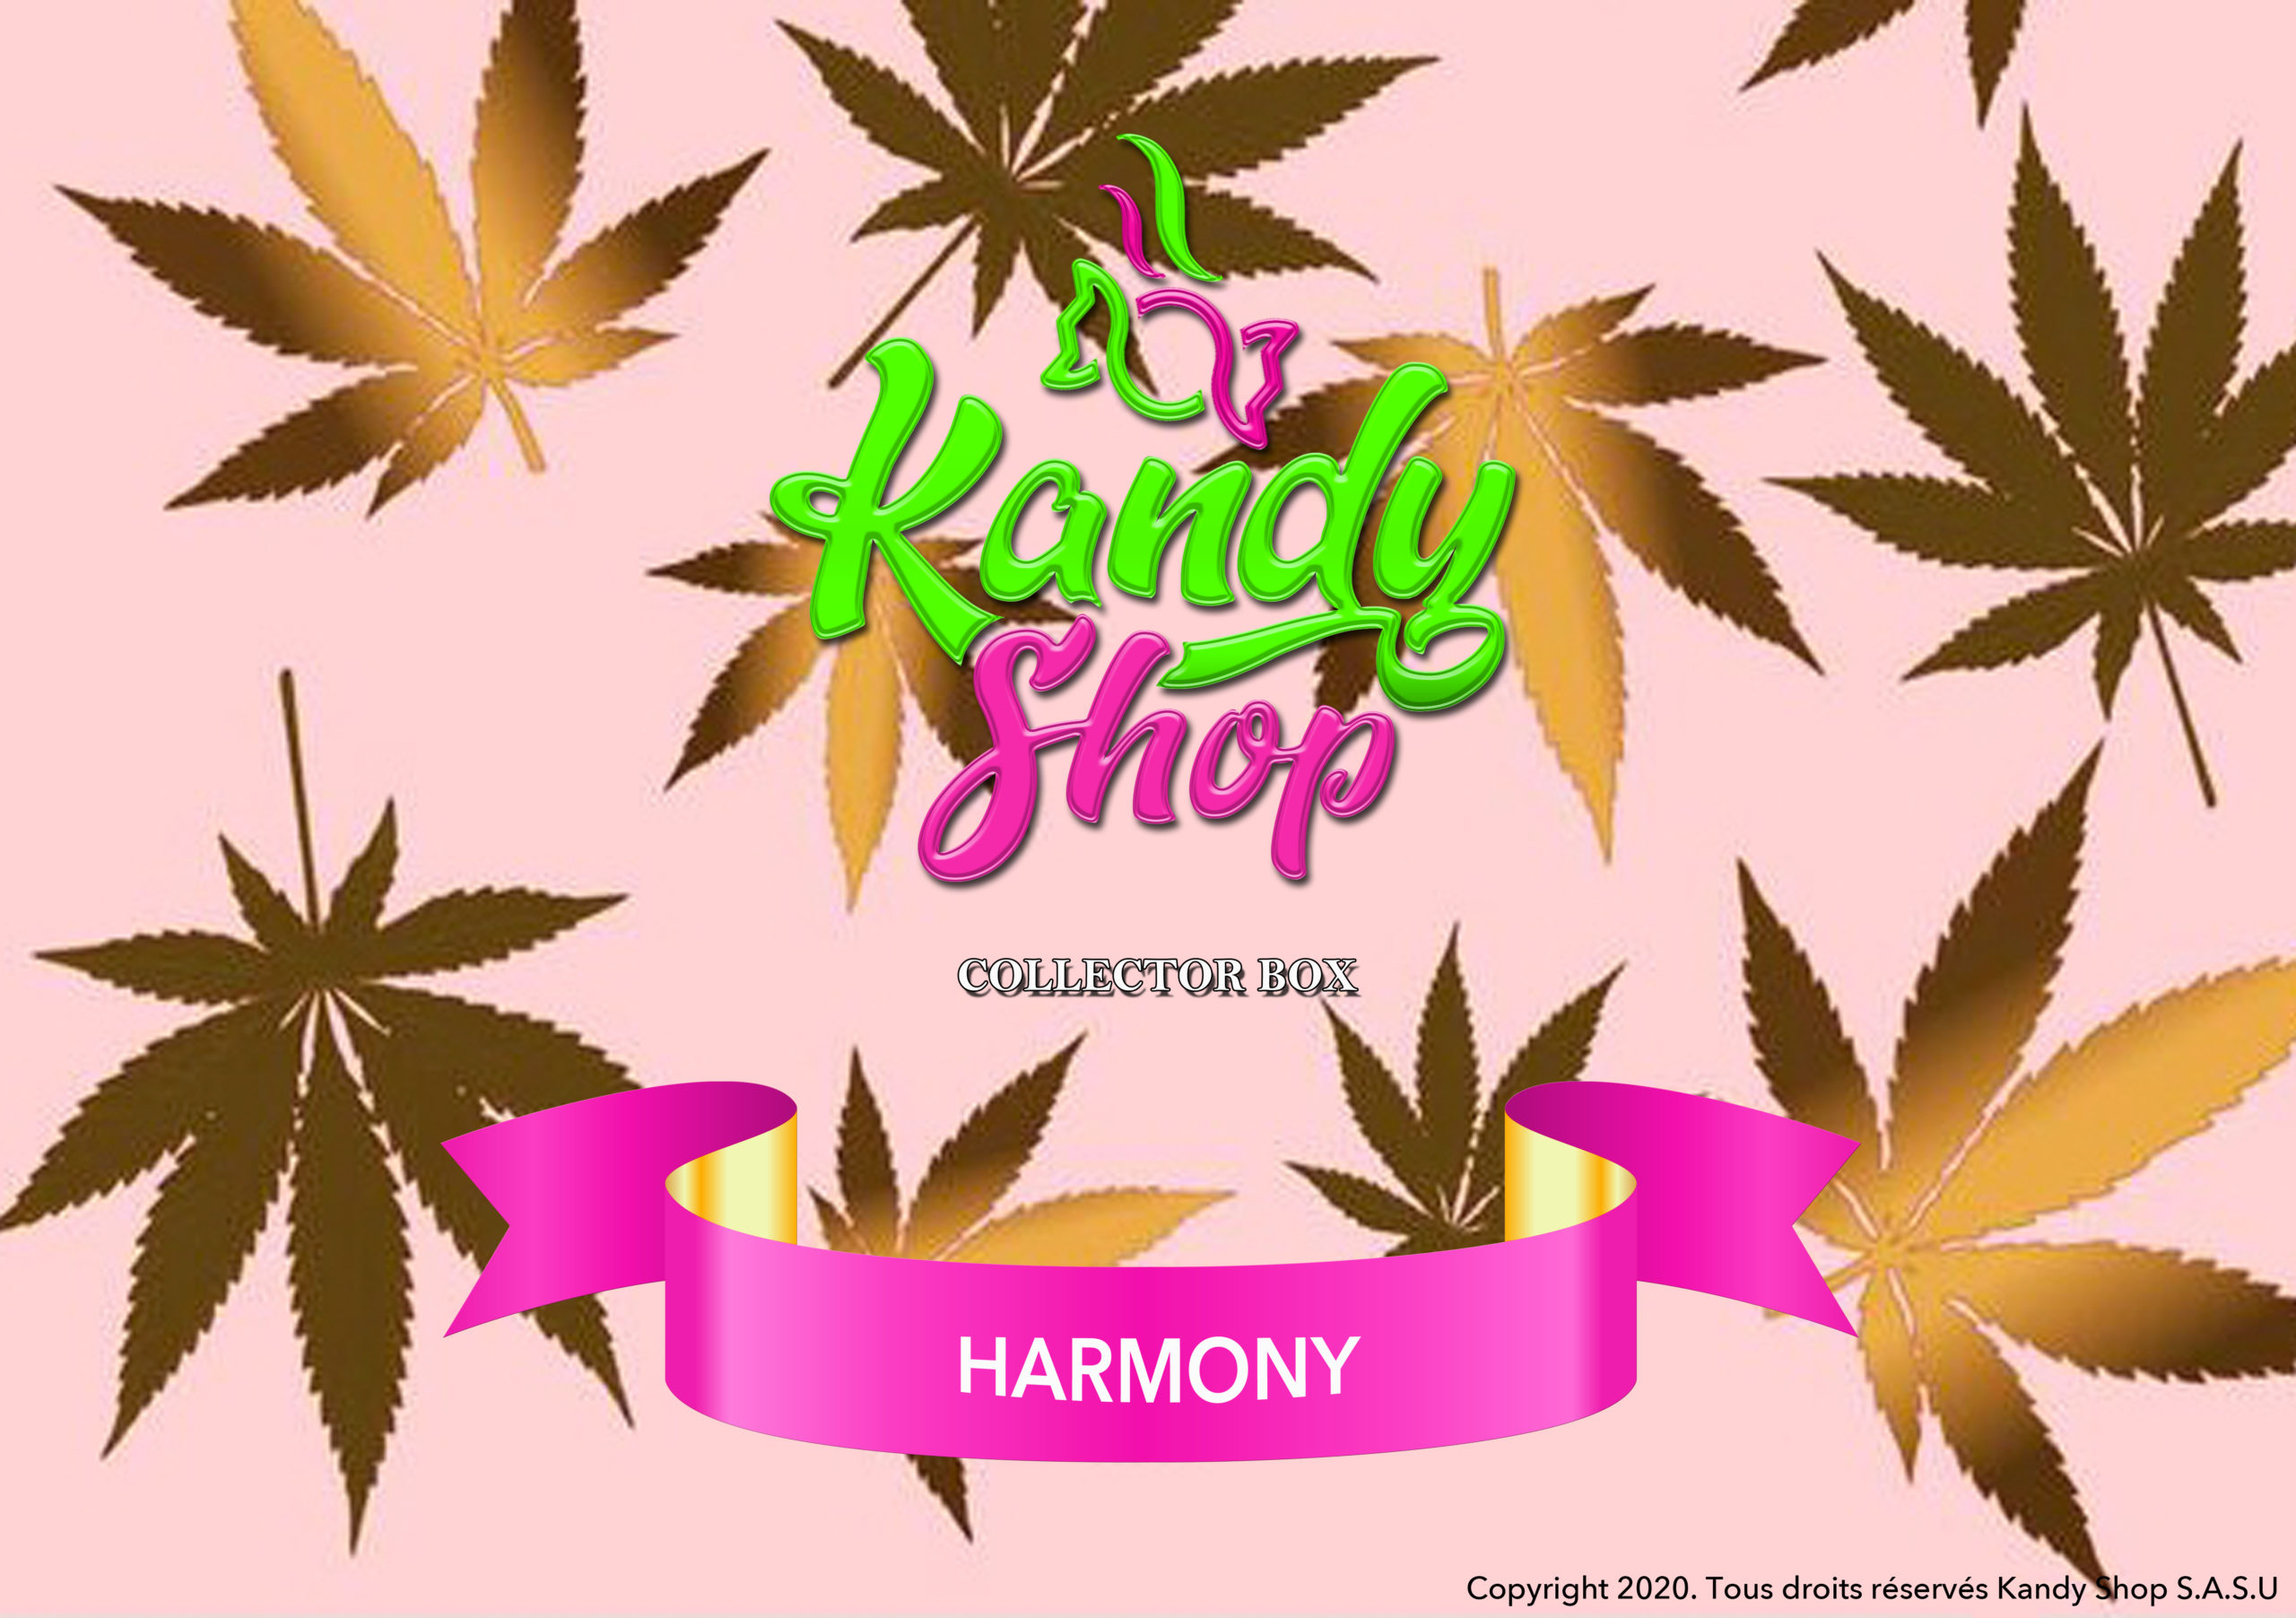 kandy box harmony kandy shop cbd